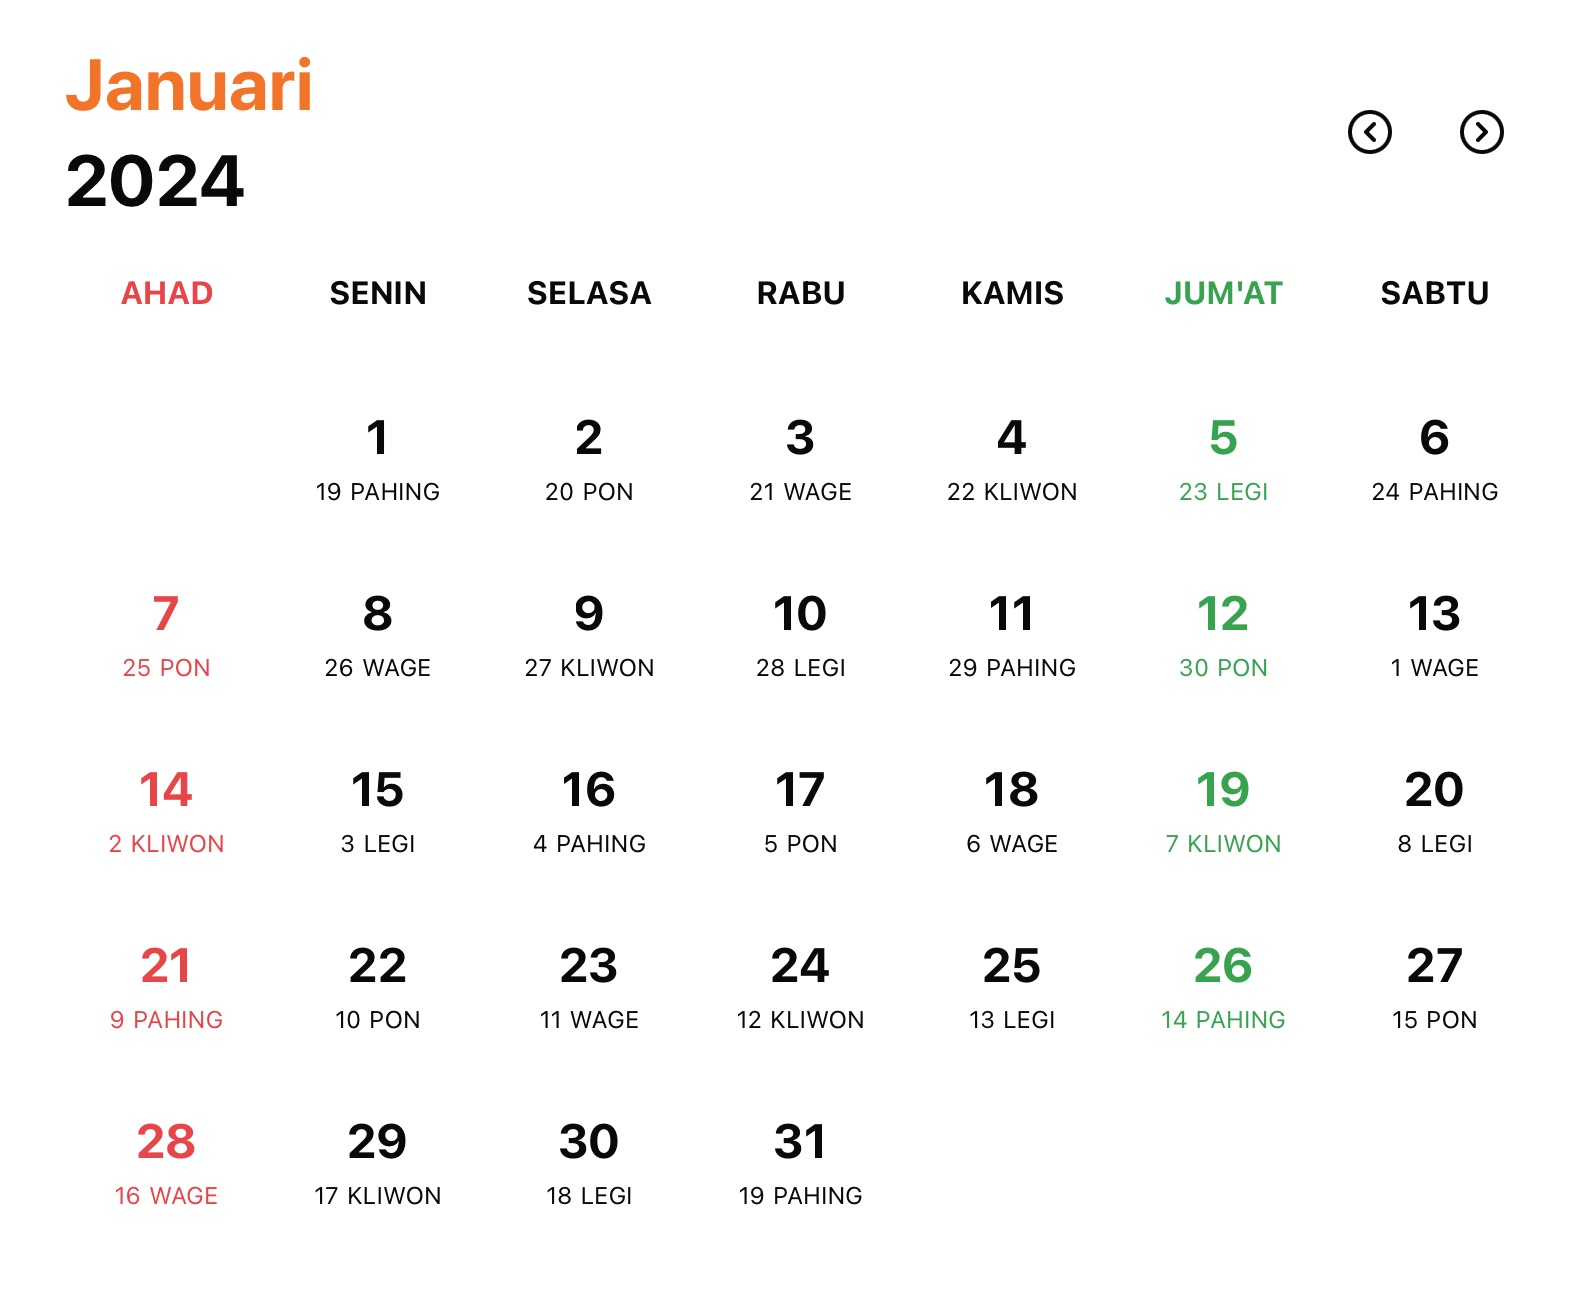 Gambar Kalender Jawa Bulan Januari Tahun 2024